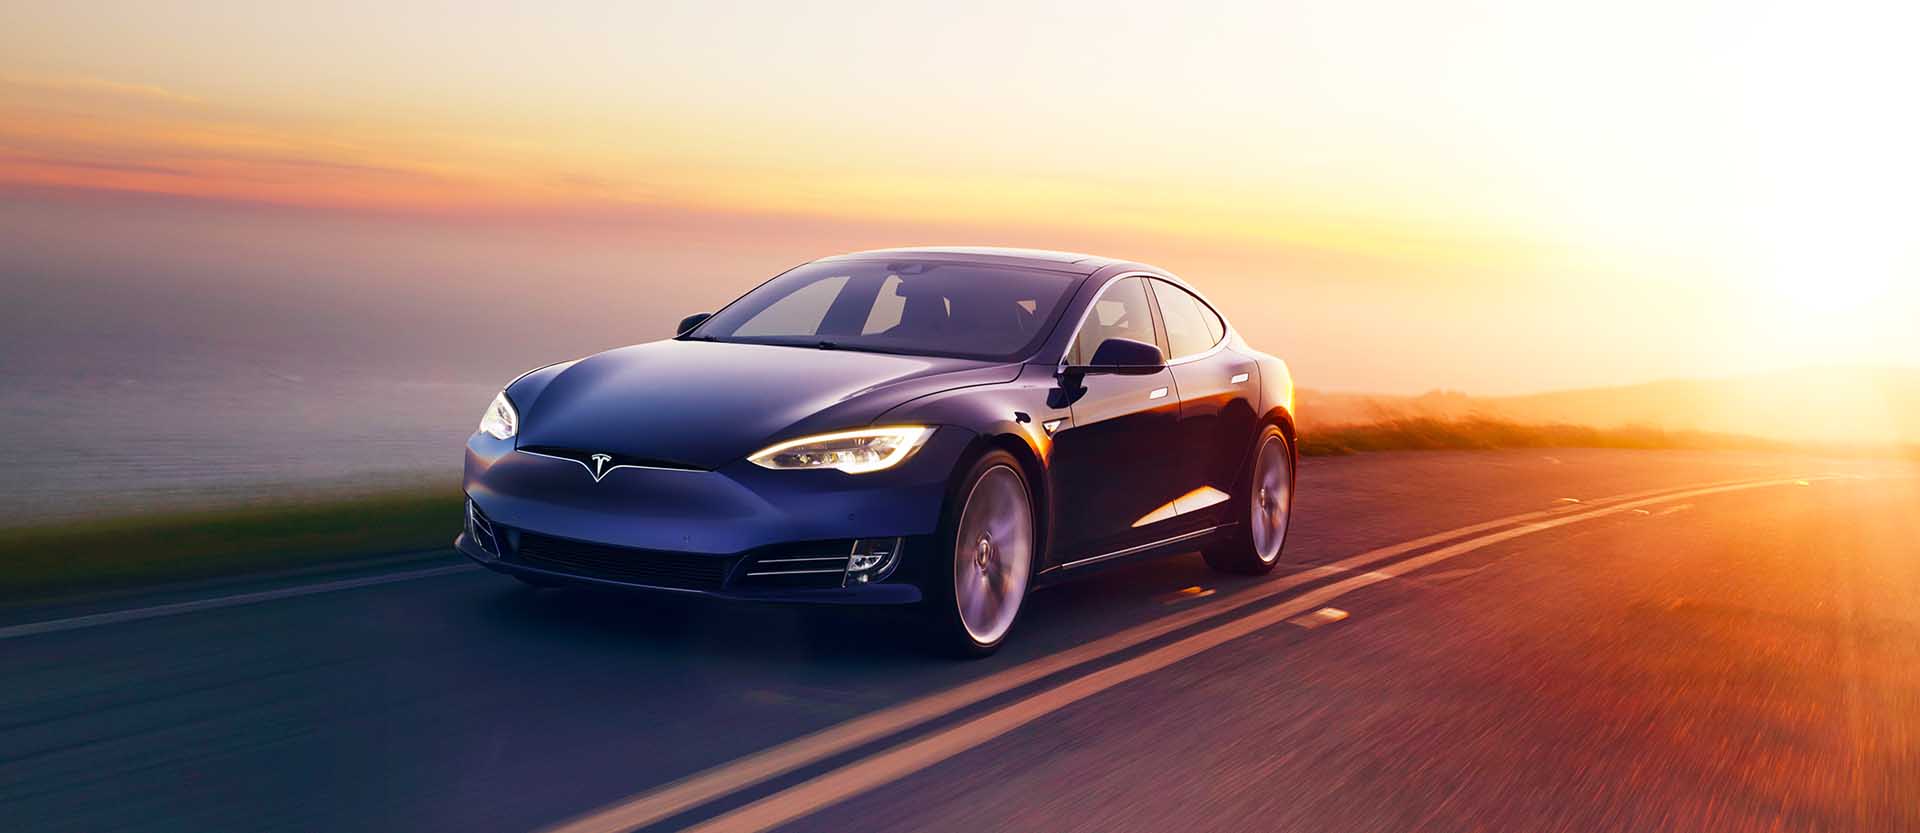 Tesla’s Impact on the Automotive Industry through Autonomous Driving Technology